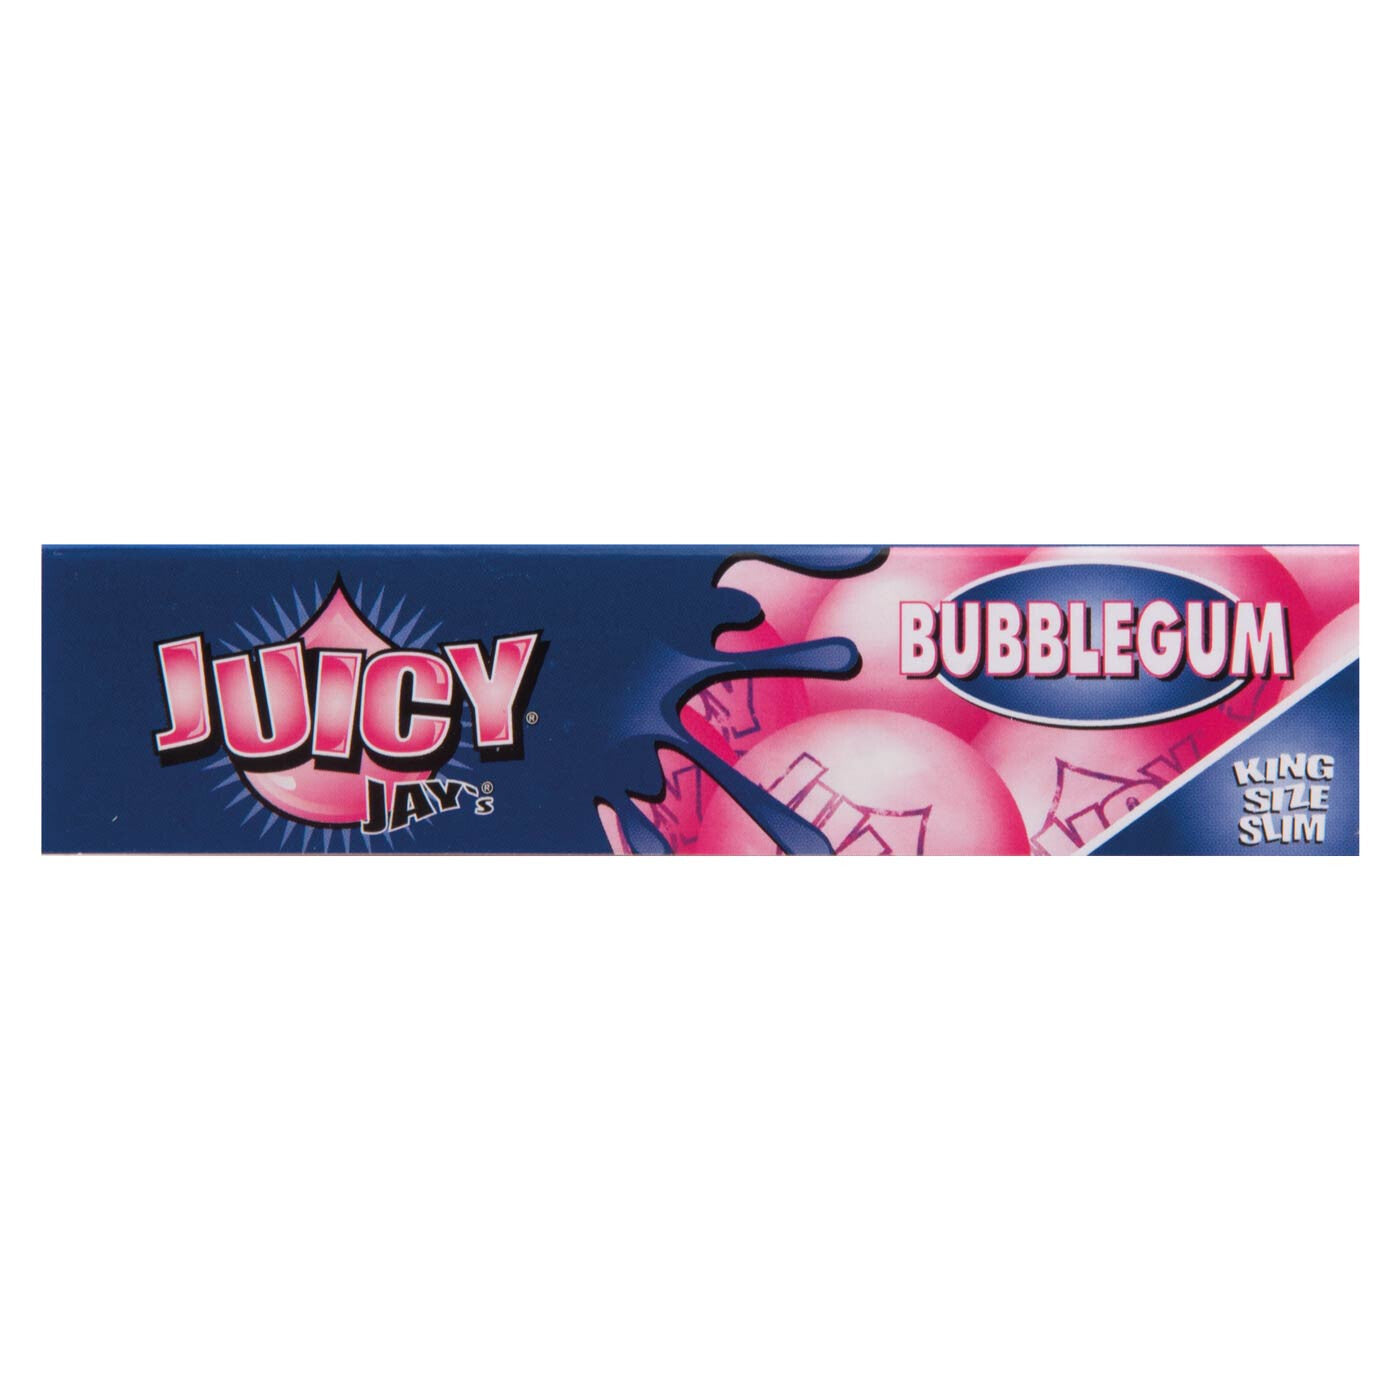 Juicy Jays Bubblegum Kss 1 PC voorkant